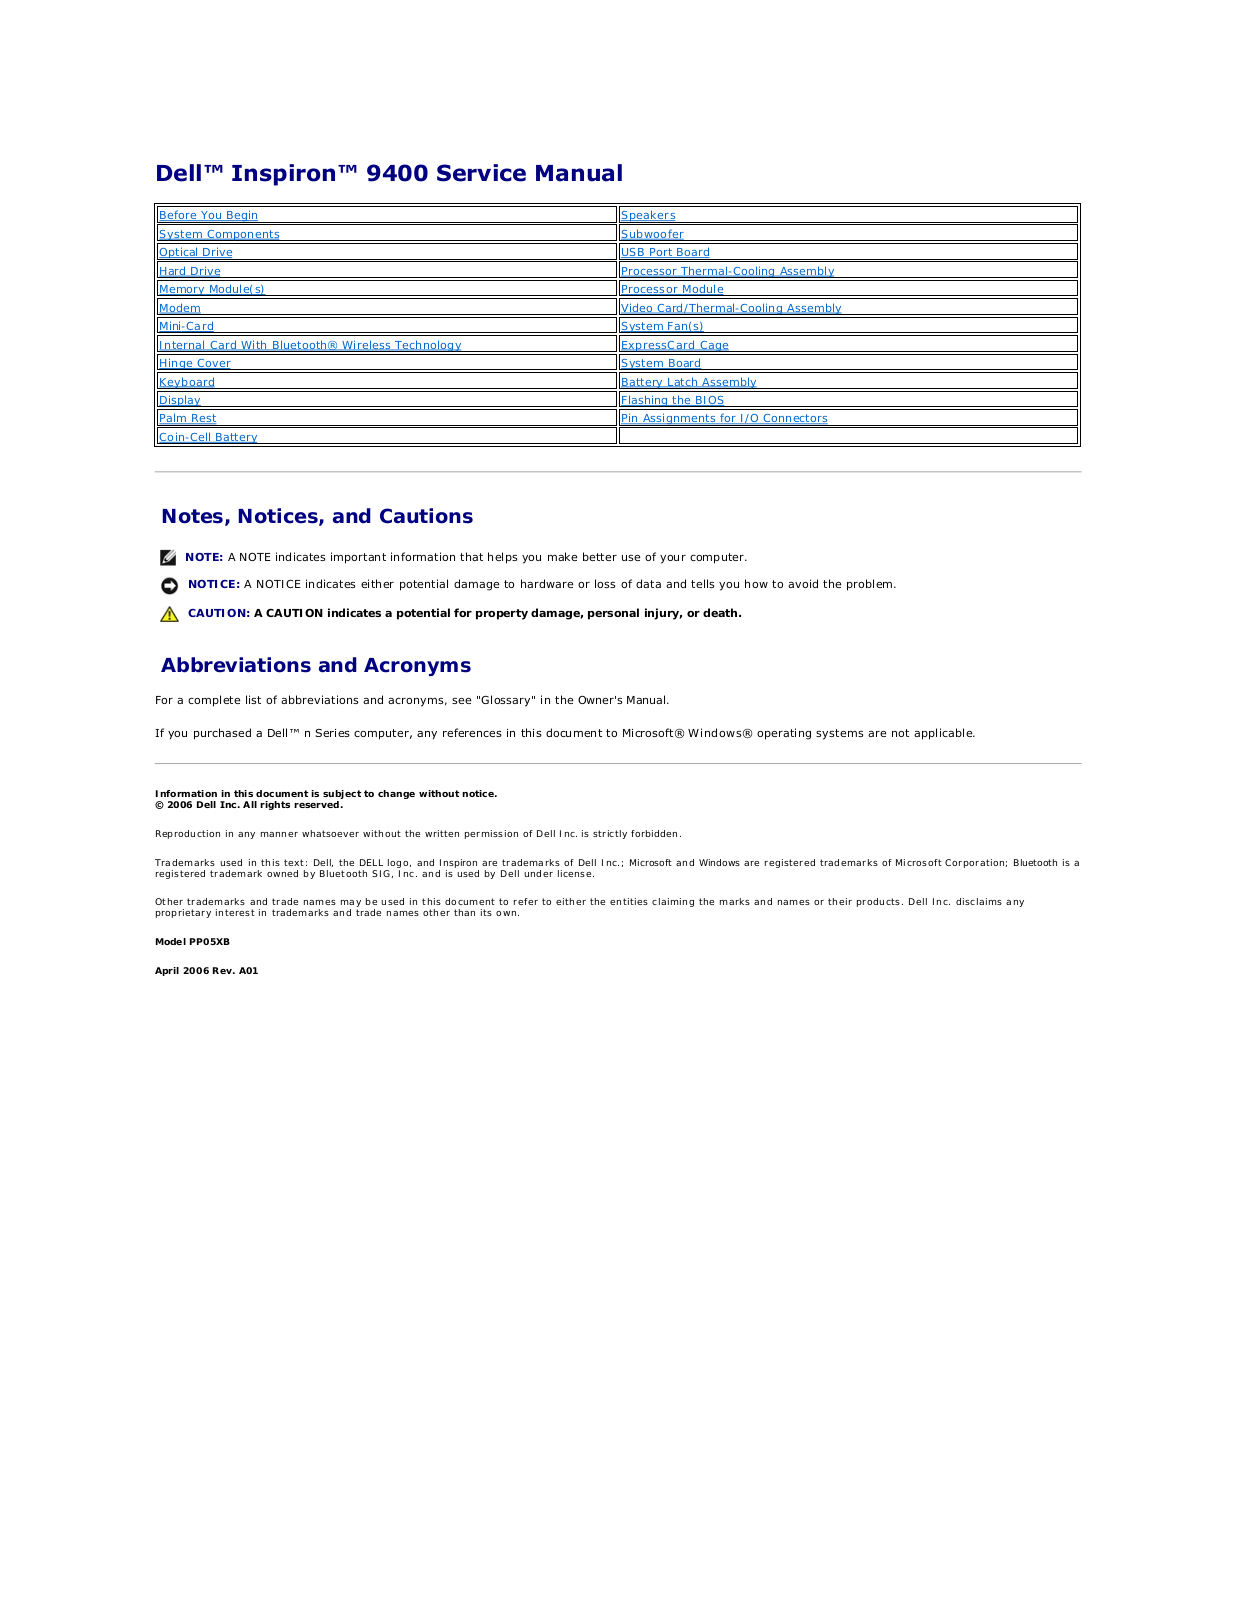 Dell Inspiron 9400 User Manual